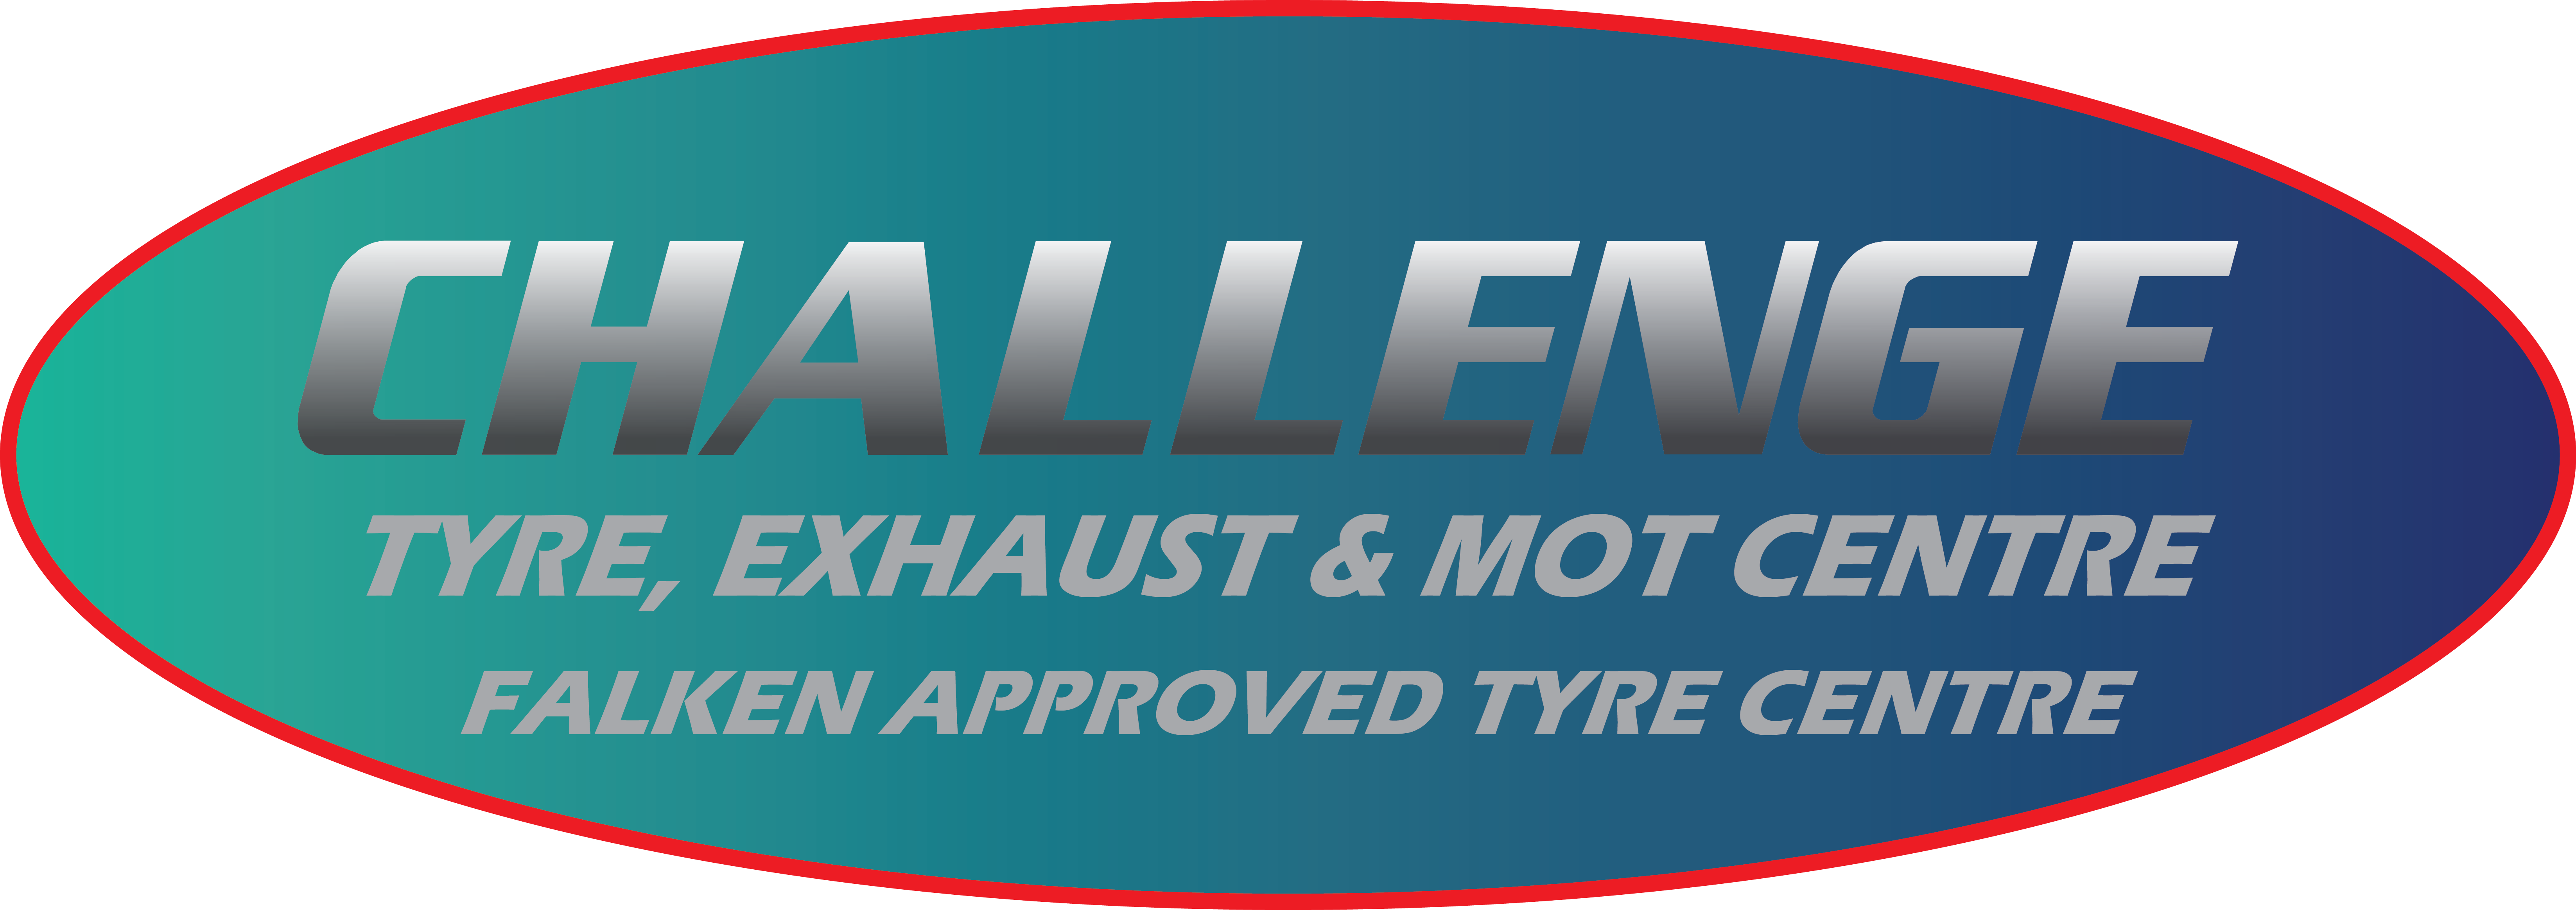 Challenge Tyre Exhaust & MOT Centre logo